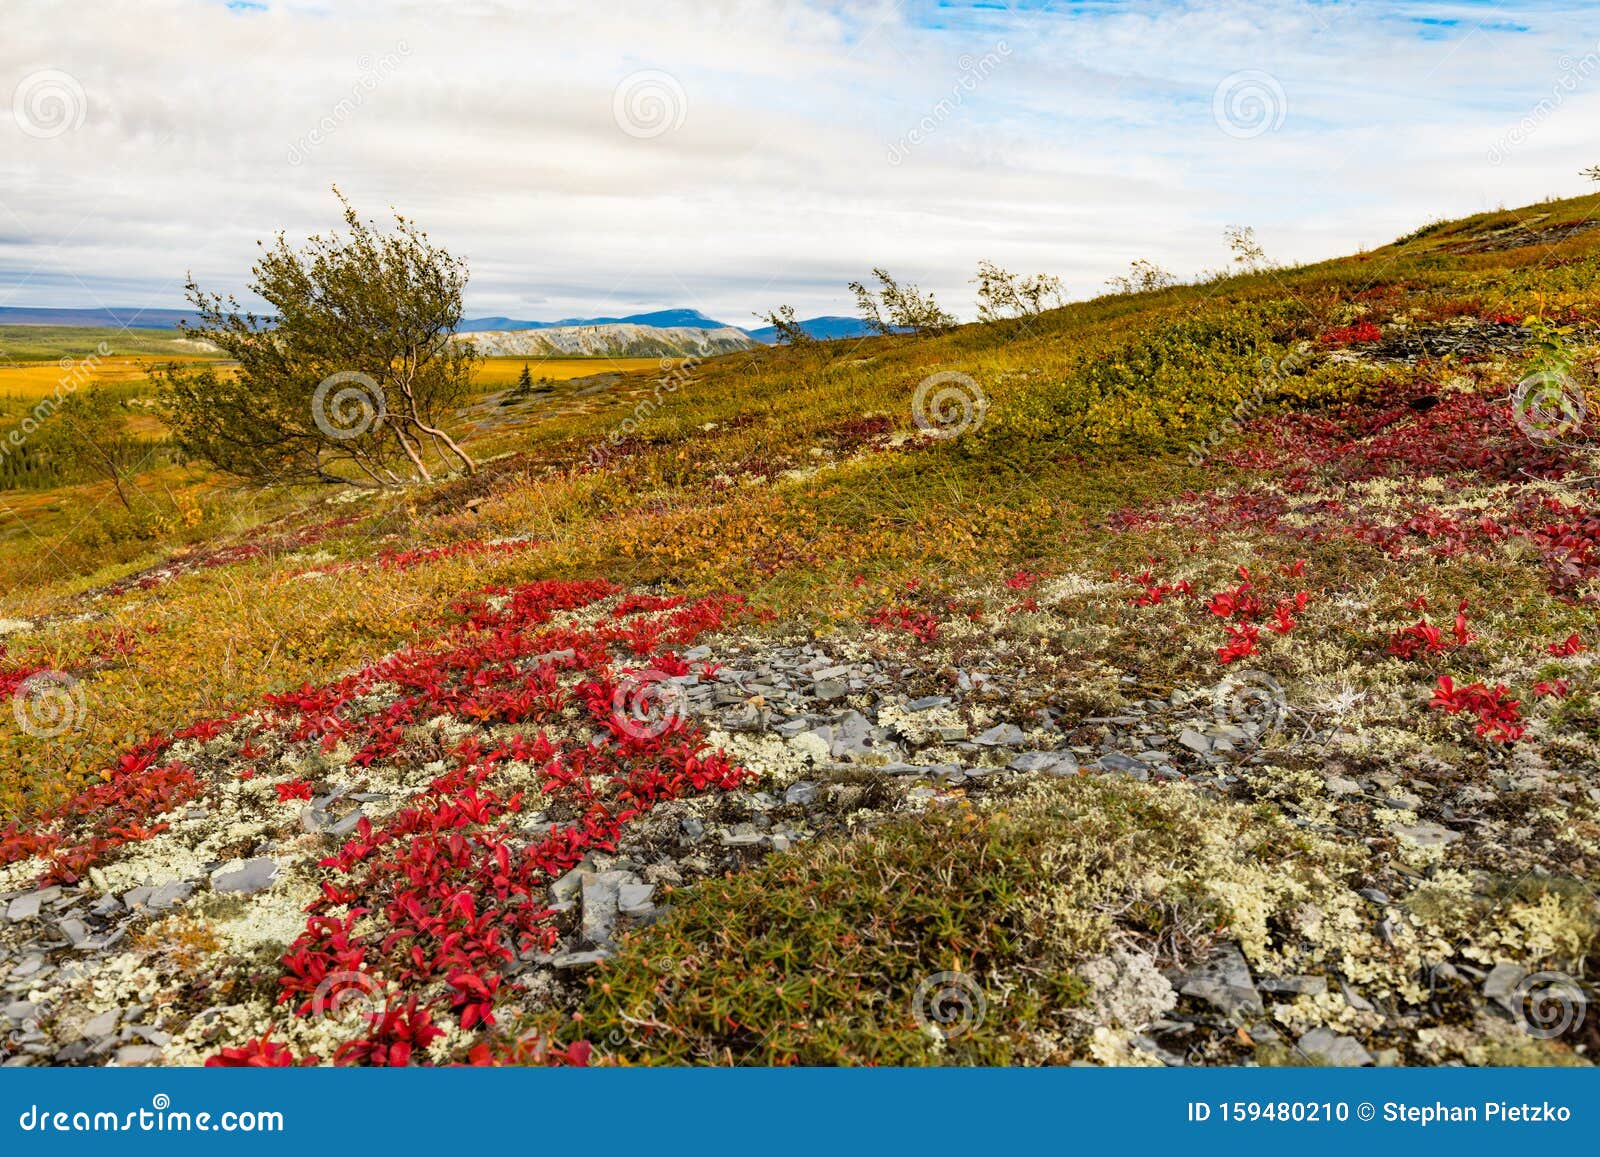 arctic tundra fall colors yukon territory canada